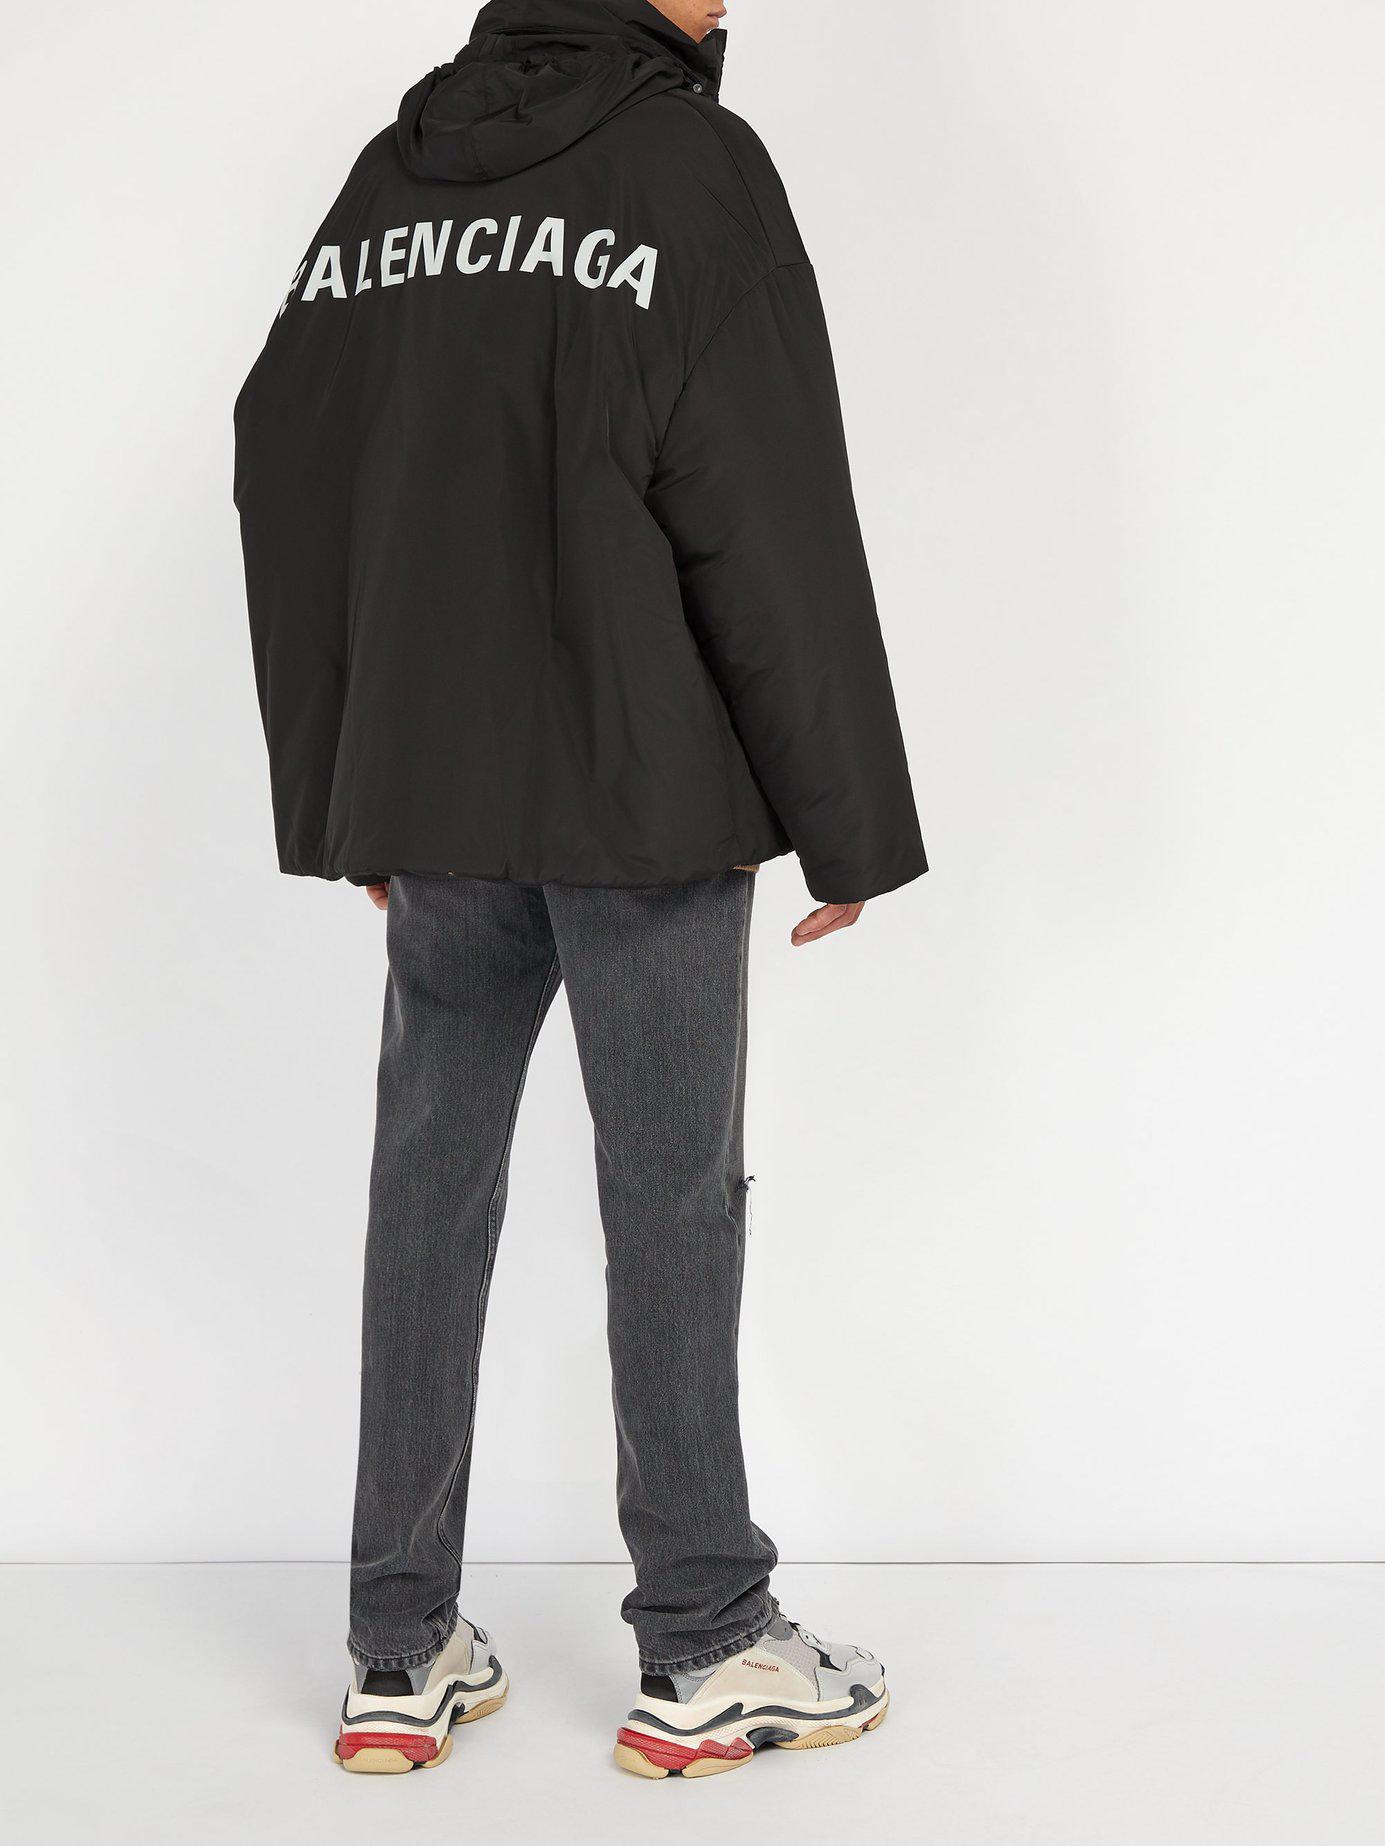 Tổng hợp 82+ về balenciaga logo jacket hay nhất - Du học Akina